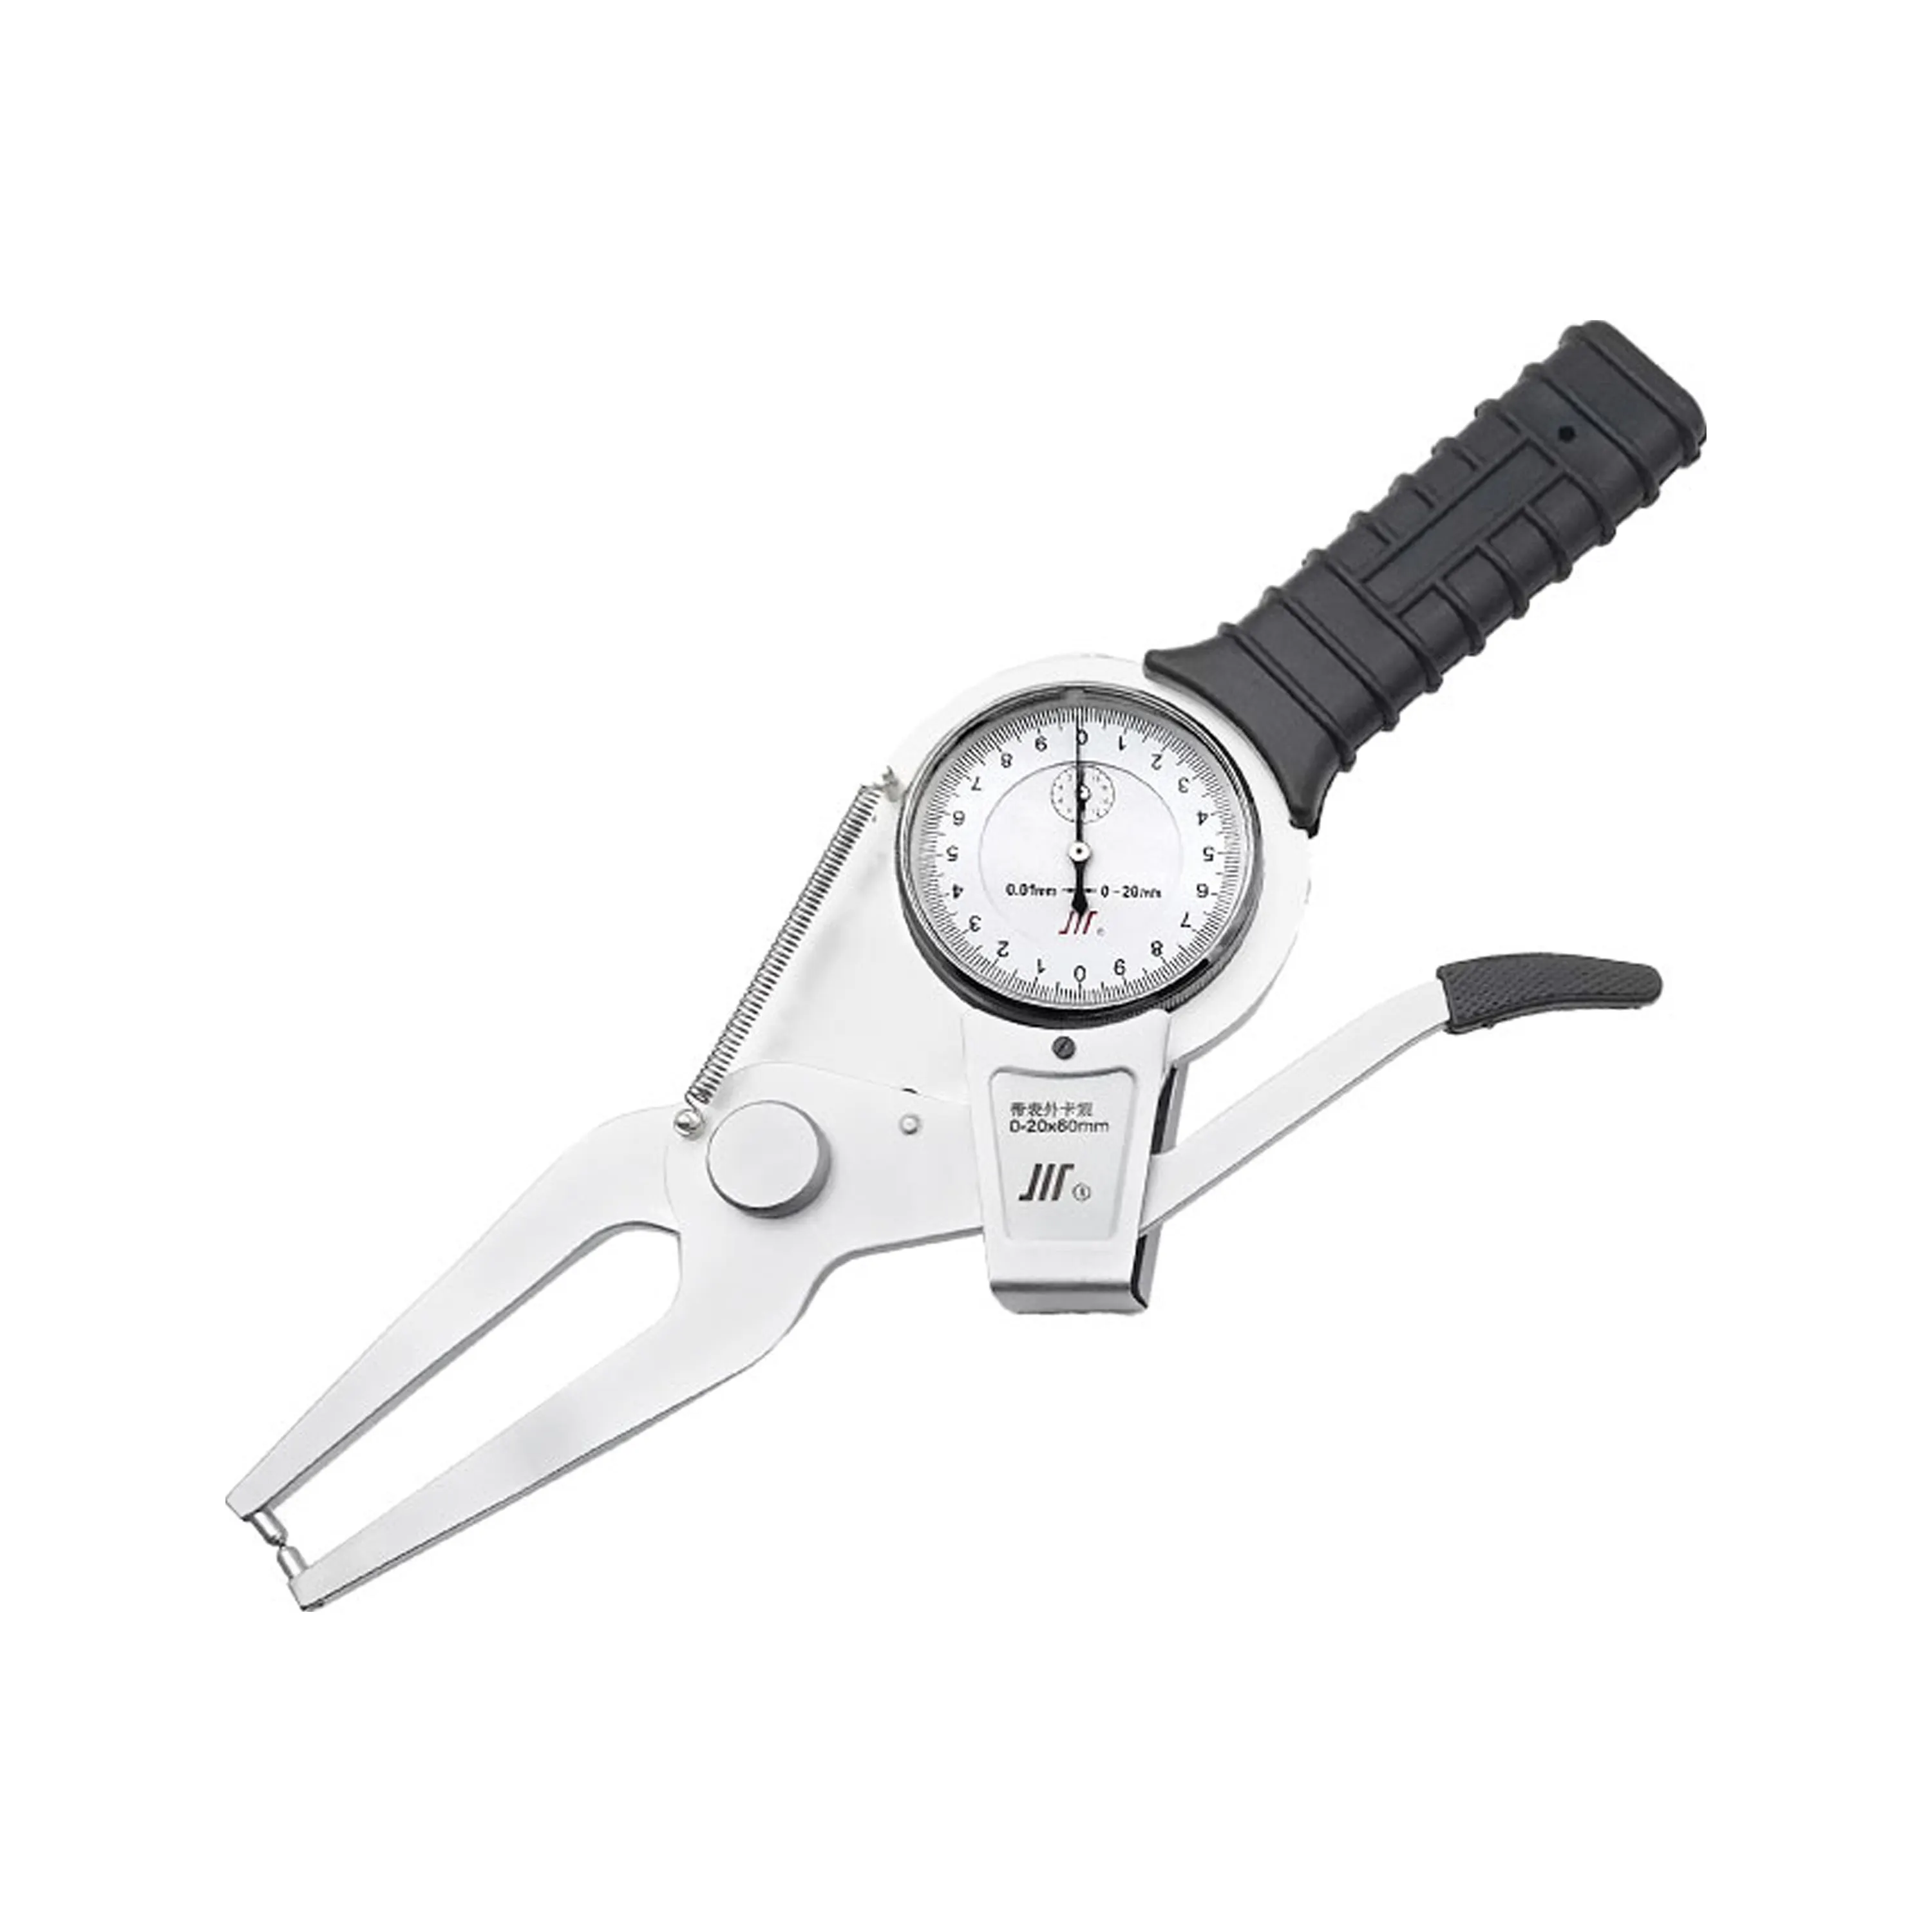 Thickness gauge dial indicator special measuring gauging tools